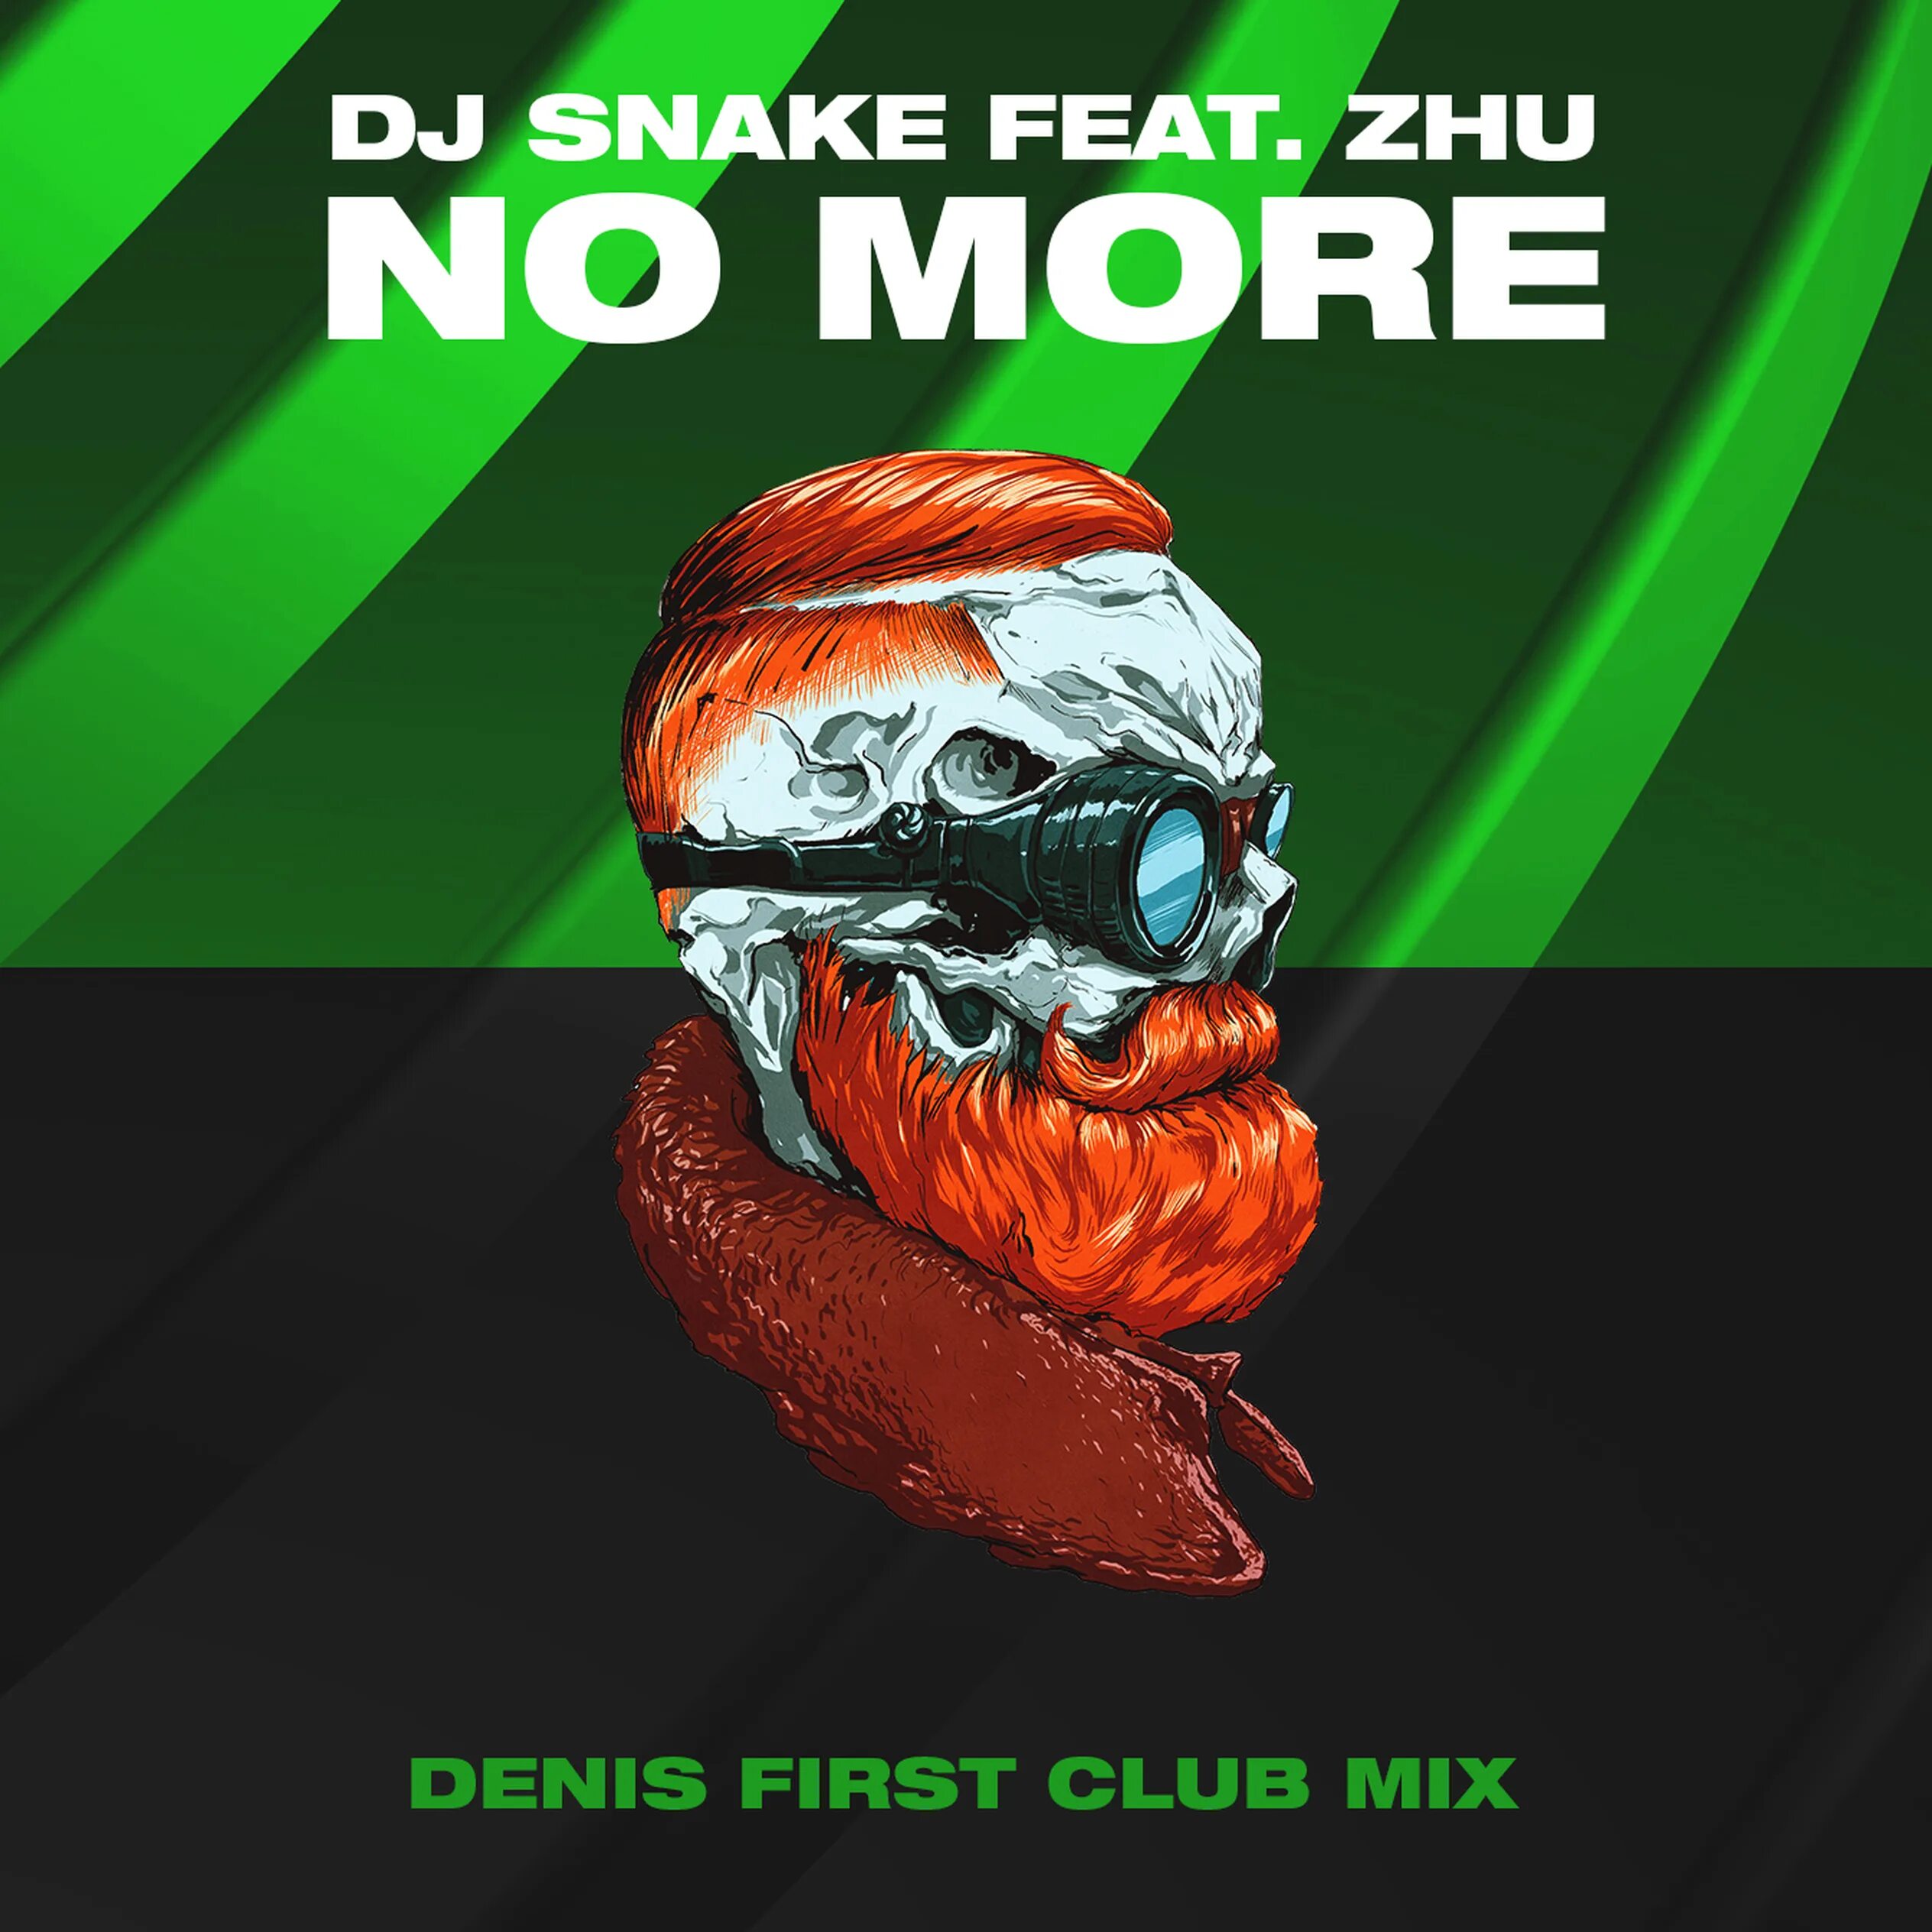 Dj snake feat. Zhu no more. DJ Snake & Zhu - no more. Denis first DJ. Denis first обложка.